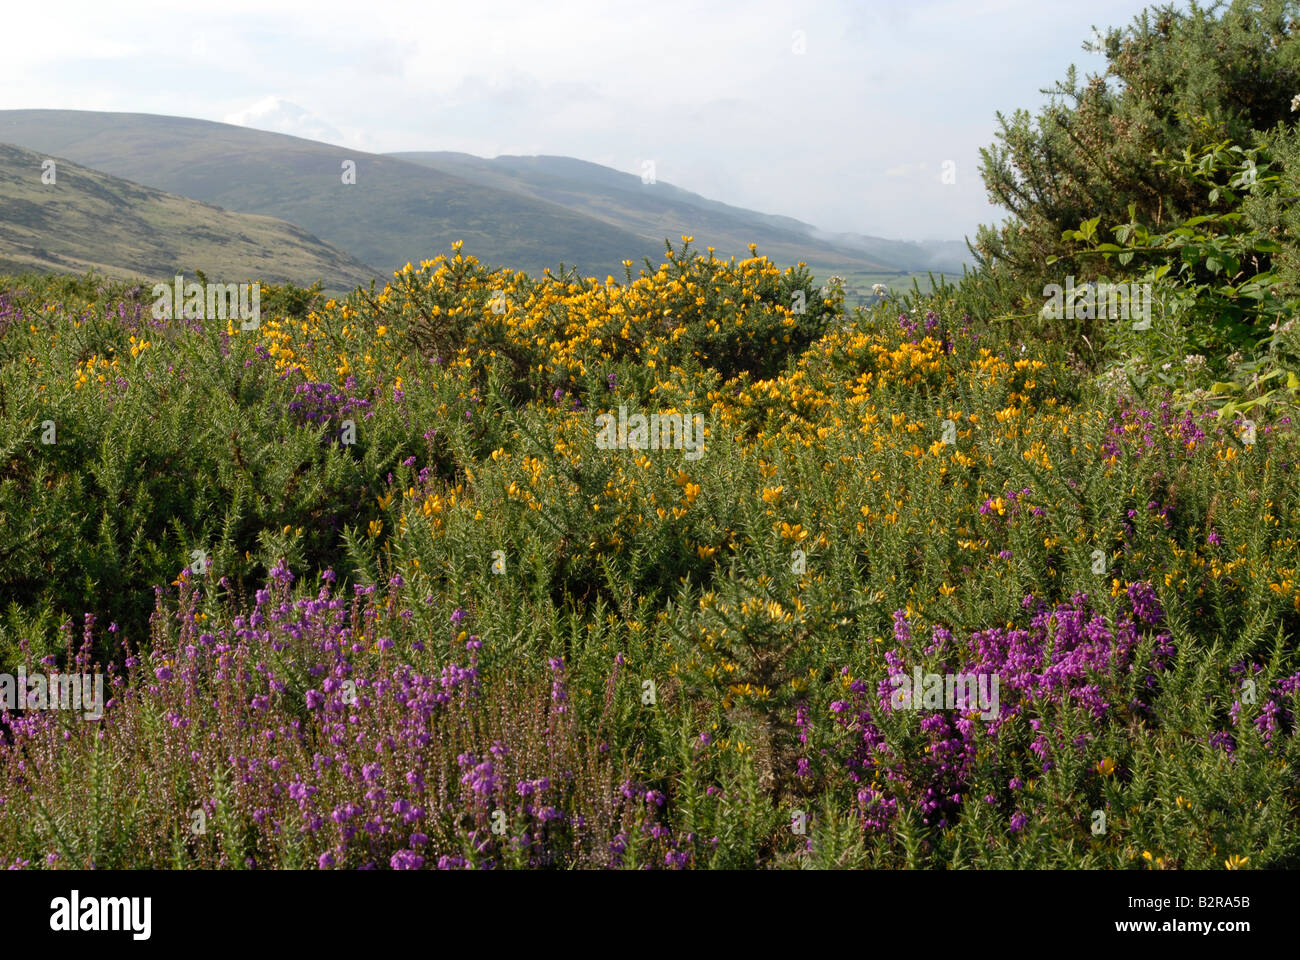 Landscape at Carlingford Mountain, Cooley Peninsua Stock Photo